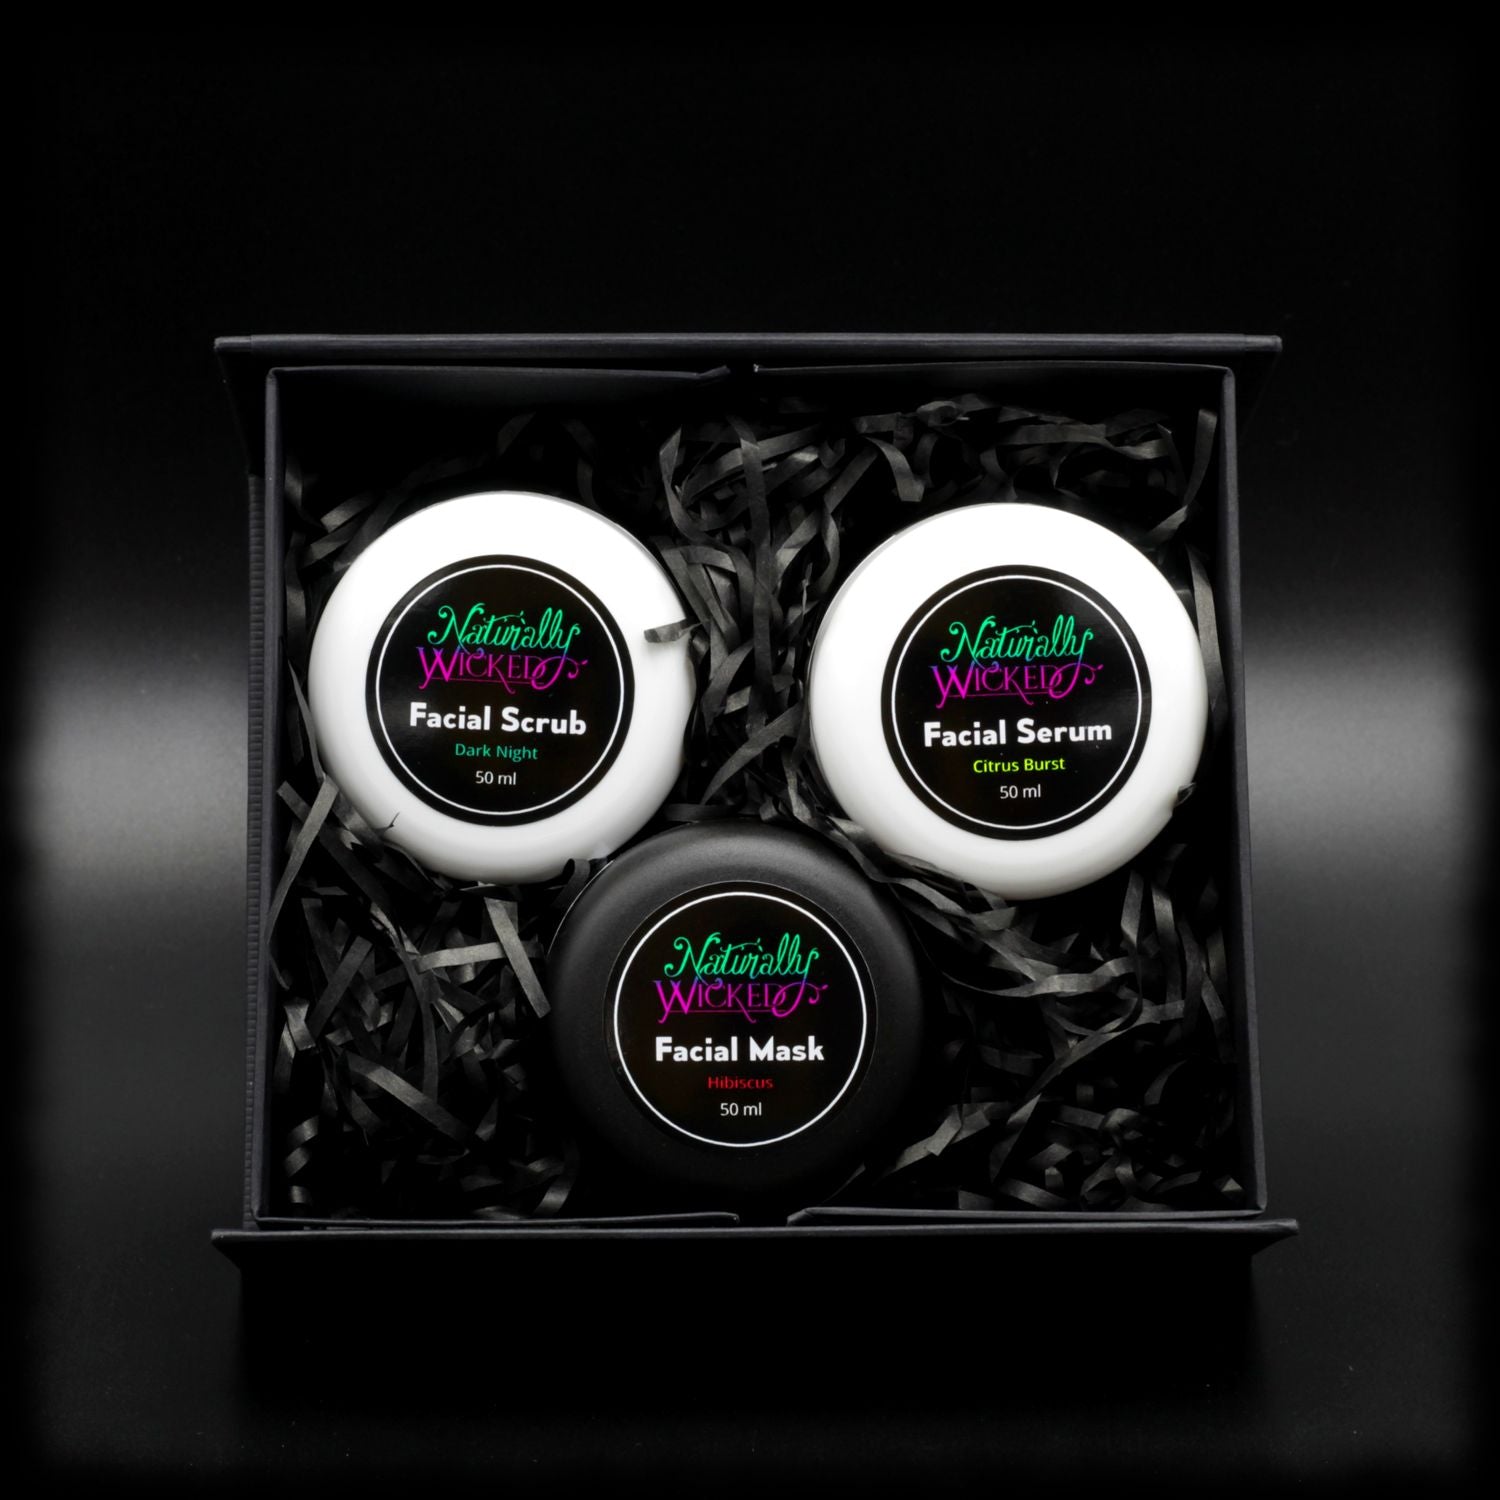 Naturally Wicked Original 3 Step Facial Kit With Dark Night Facial Scrub, Hibiscus Facial Mask & Citrus Burst Facial Serum In Gift Packaged Black Box